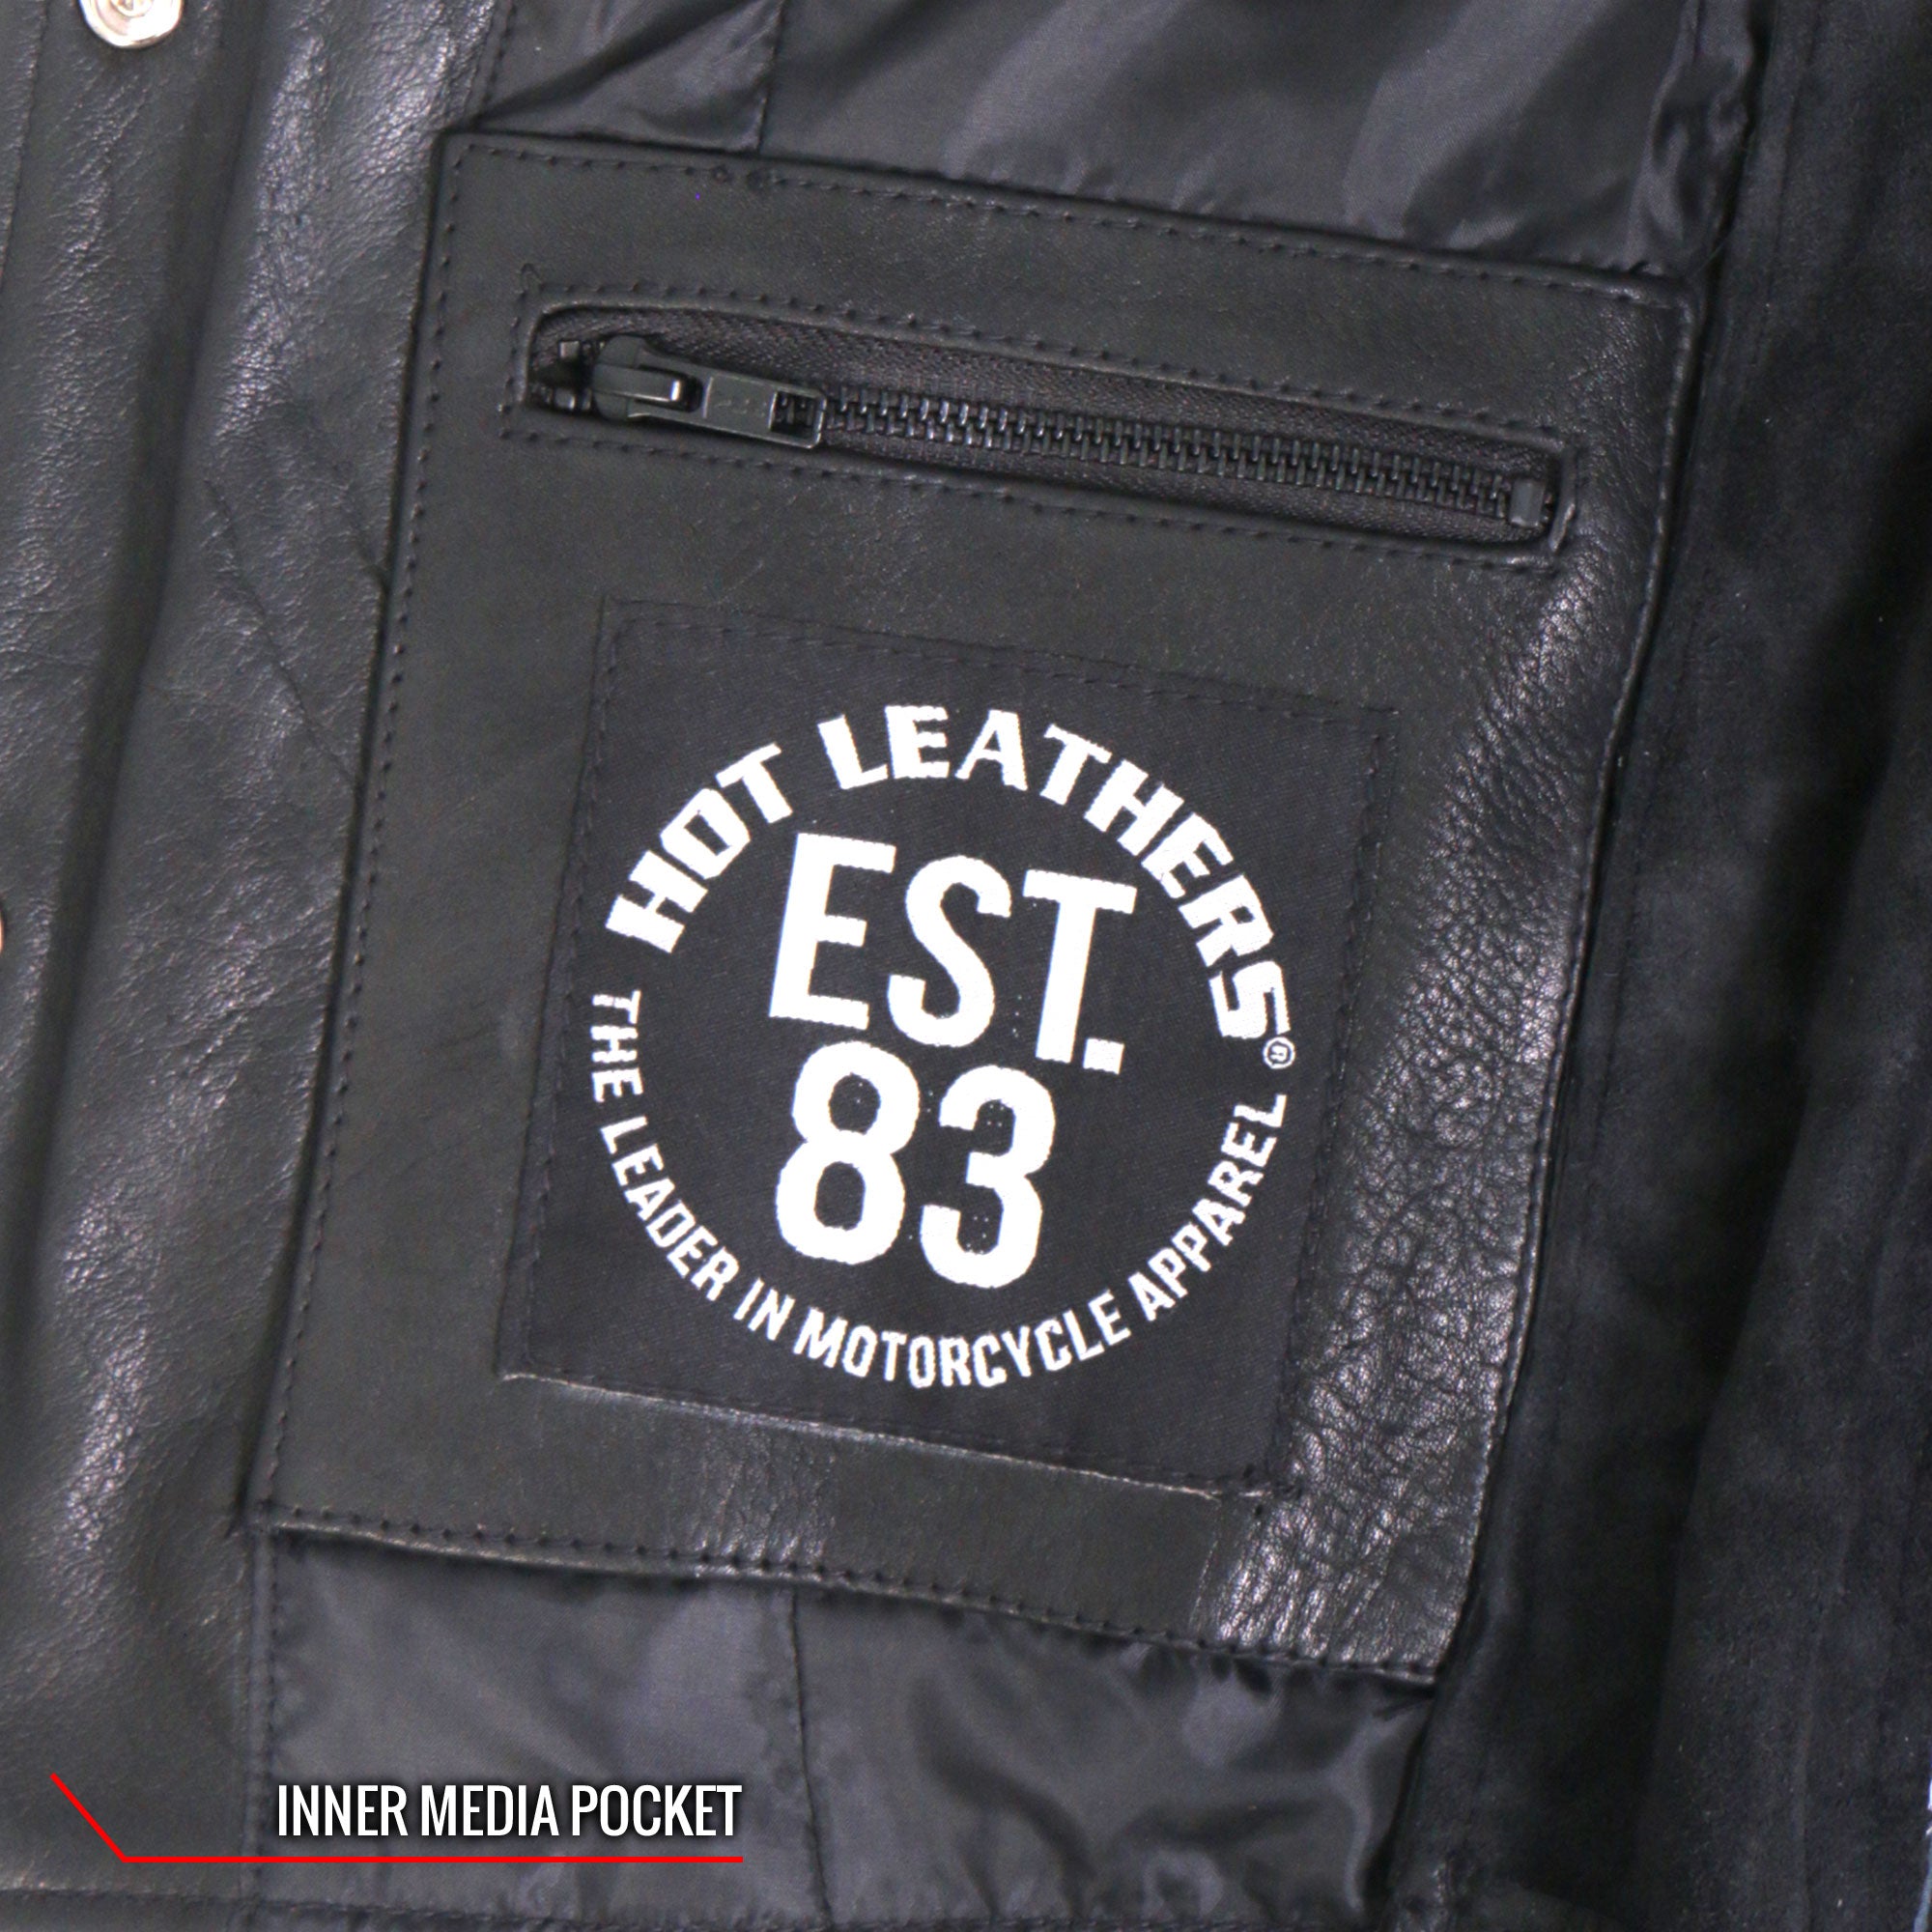 Hot Leathers VSL1018 Ladies 'Pink Paisley' Lined Black Leather Motorcycle Biker Vest